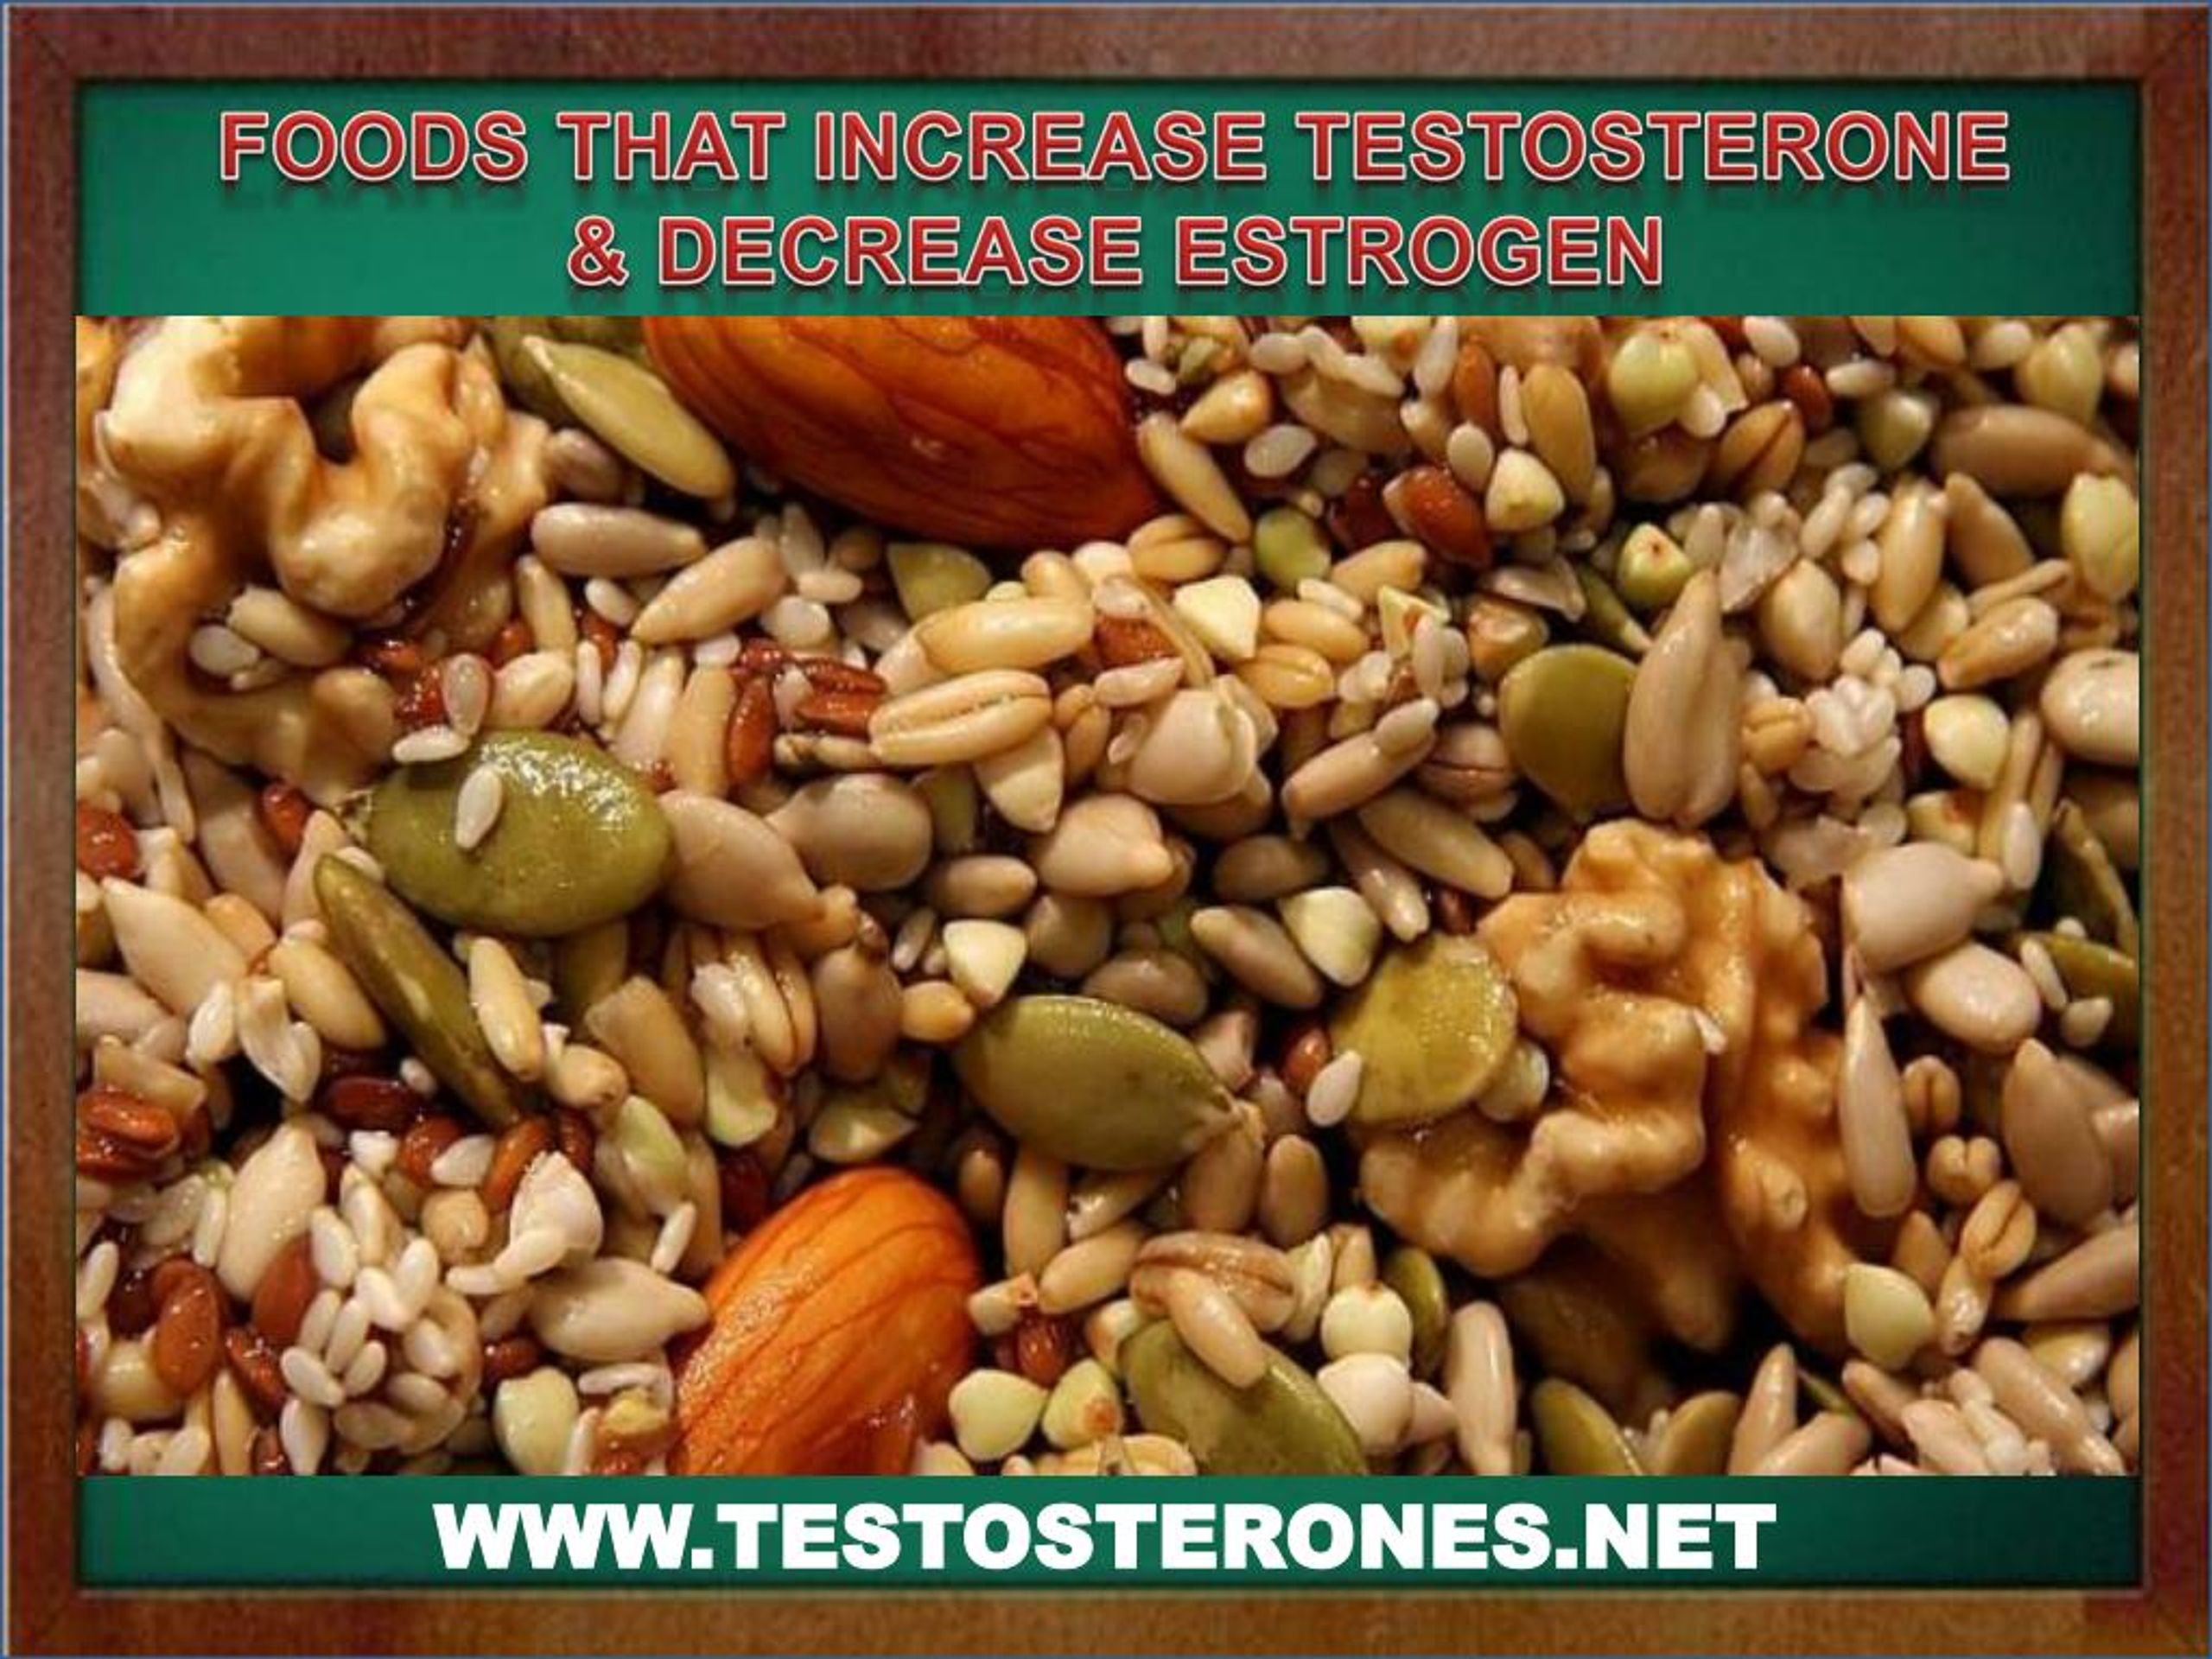 Foods that increase testosterone & decrease estrogen.